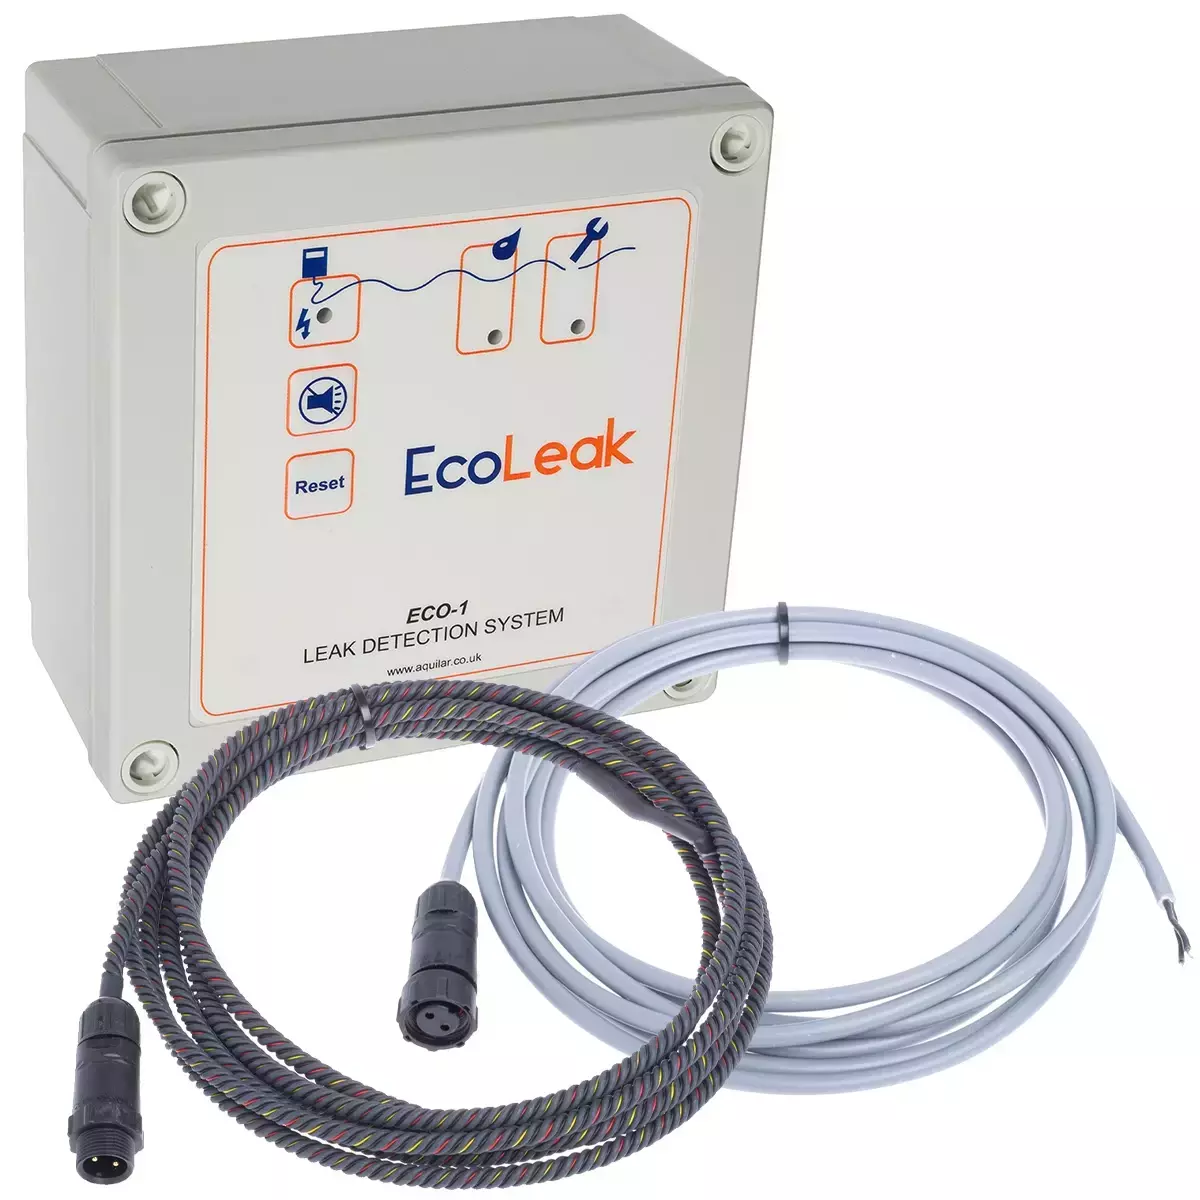 EcoLeak ECO-SC-10 alarm panel with relay + 10 m linear flood sensor